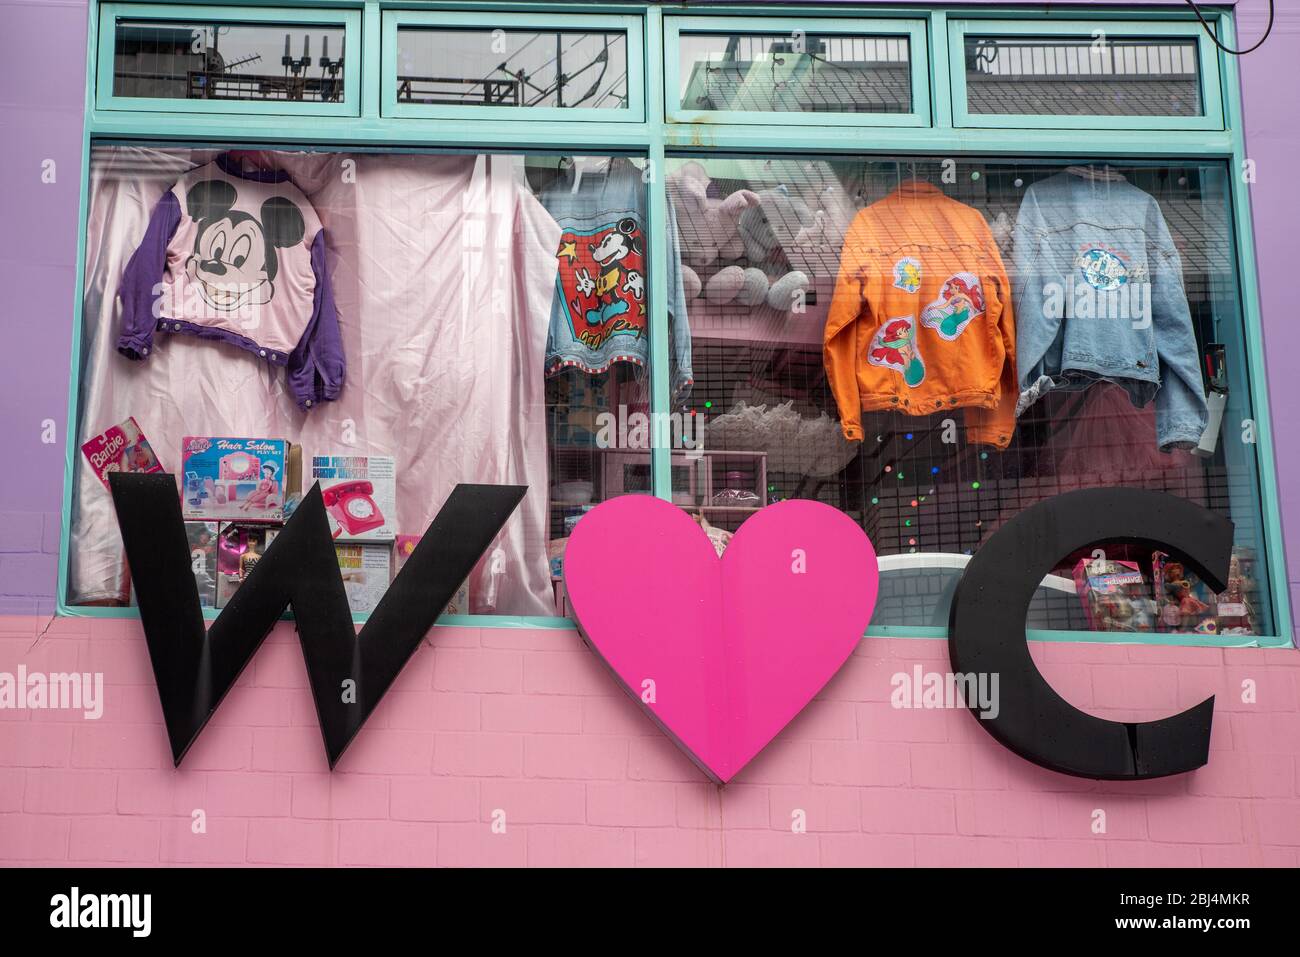 Window display at Takeshita street, in Harajuku, Tokyo, where fashion and clothing stores are abundant Stock Photo